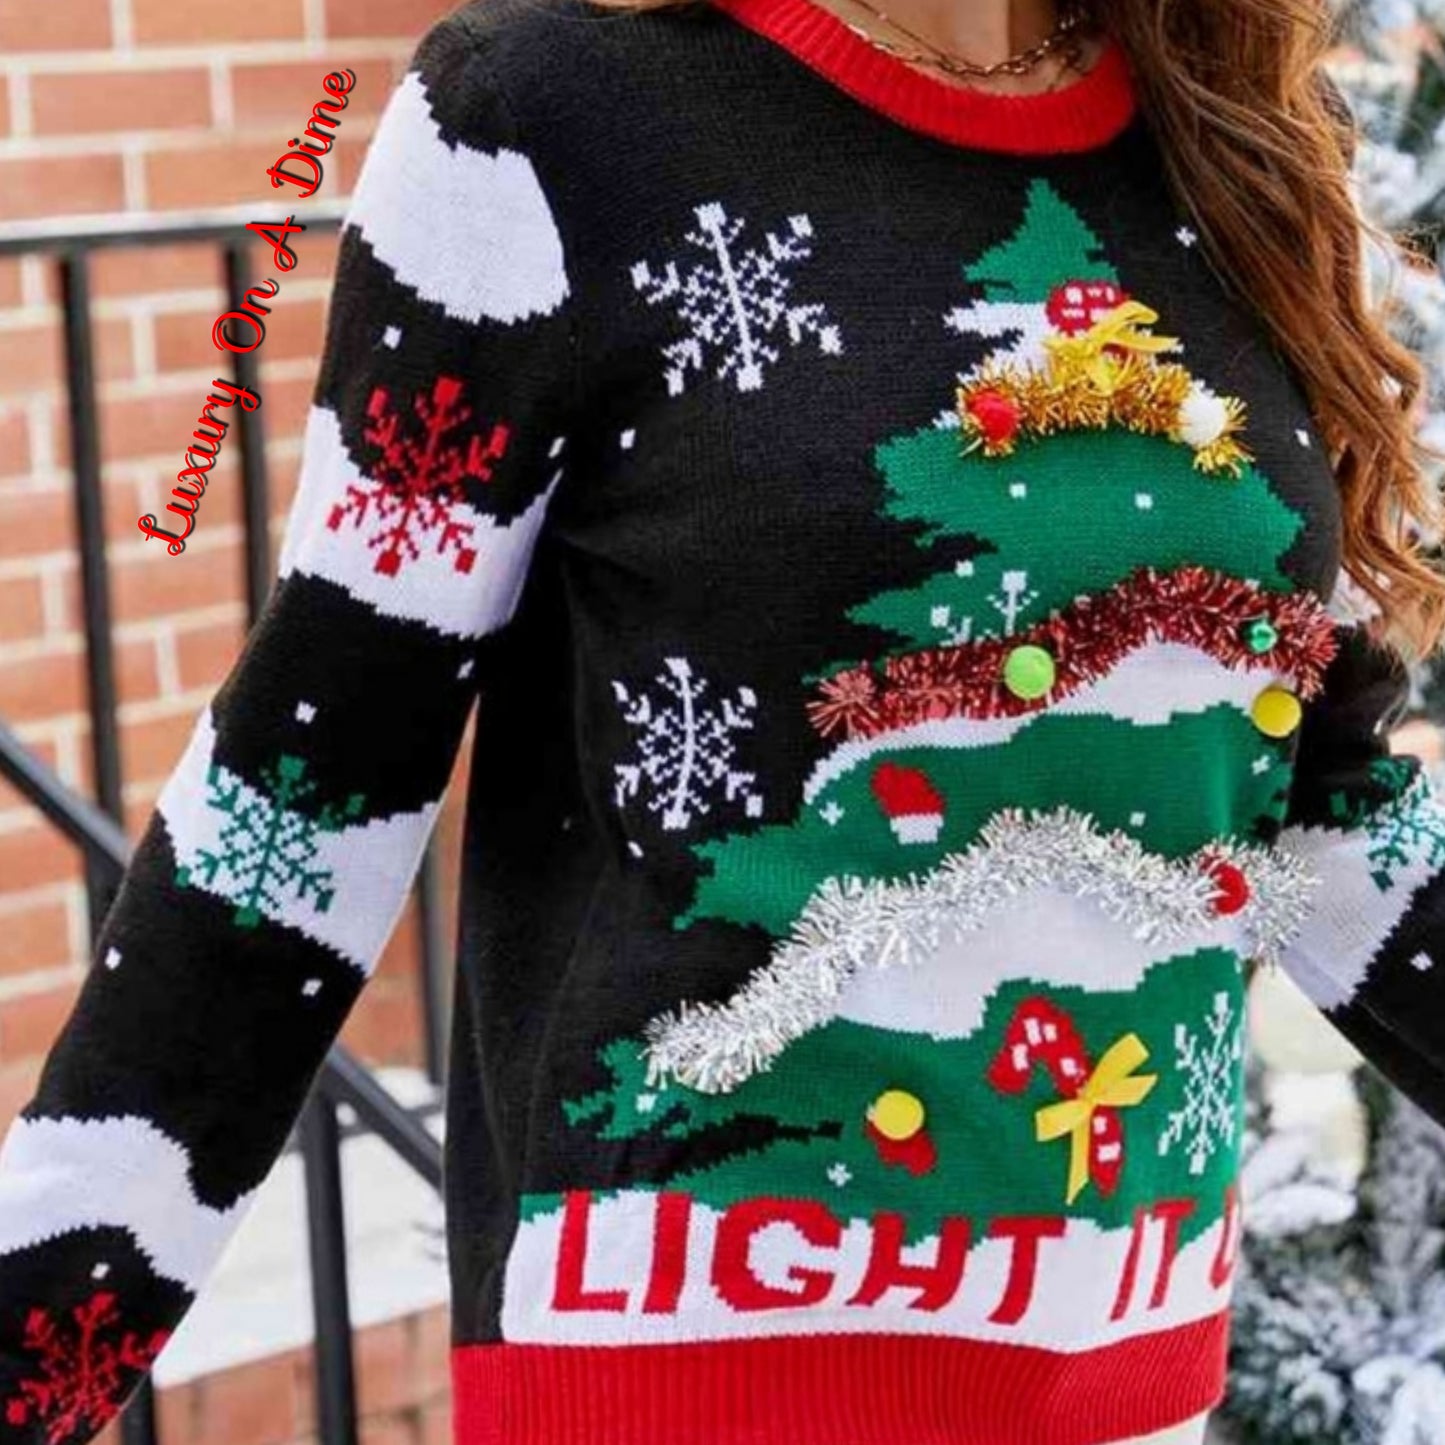 LIGHT IT UP Christmas Tree 3D Festive Puff Ball Holiday Winter Knit Sweater